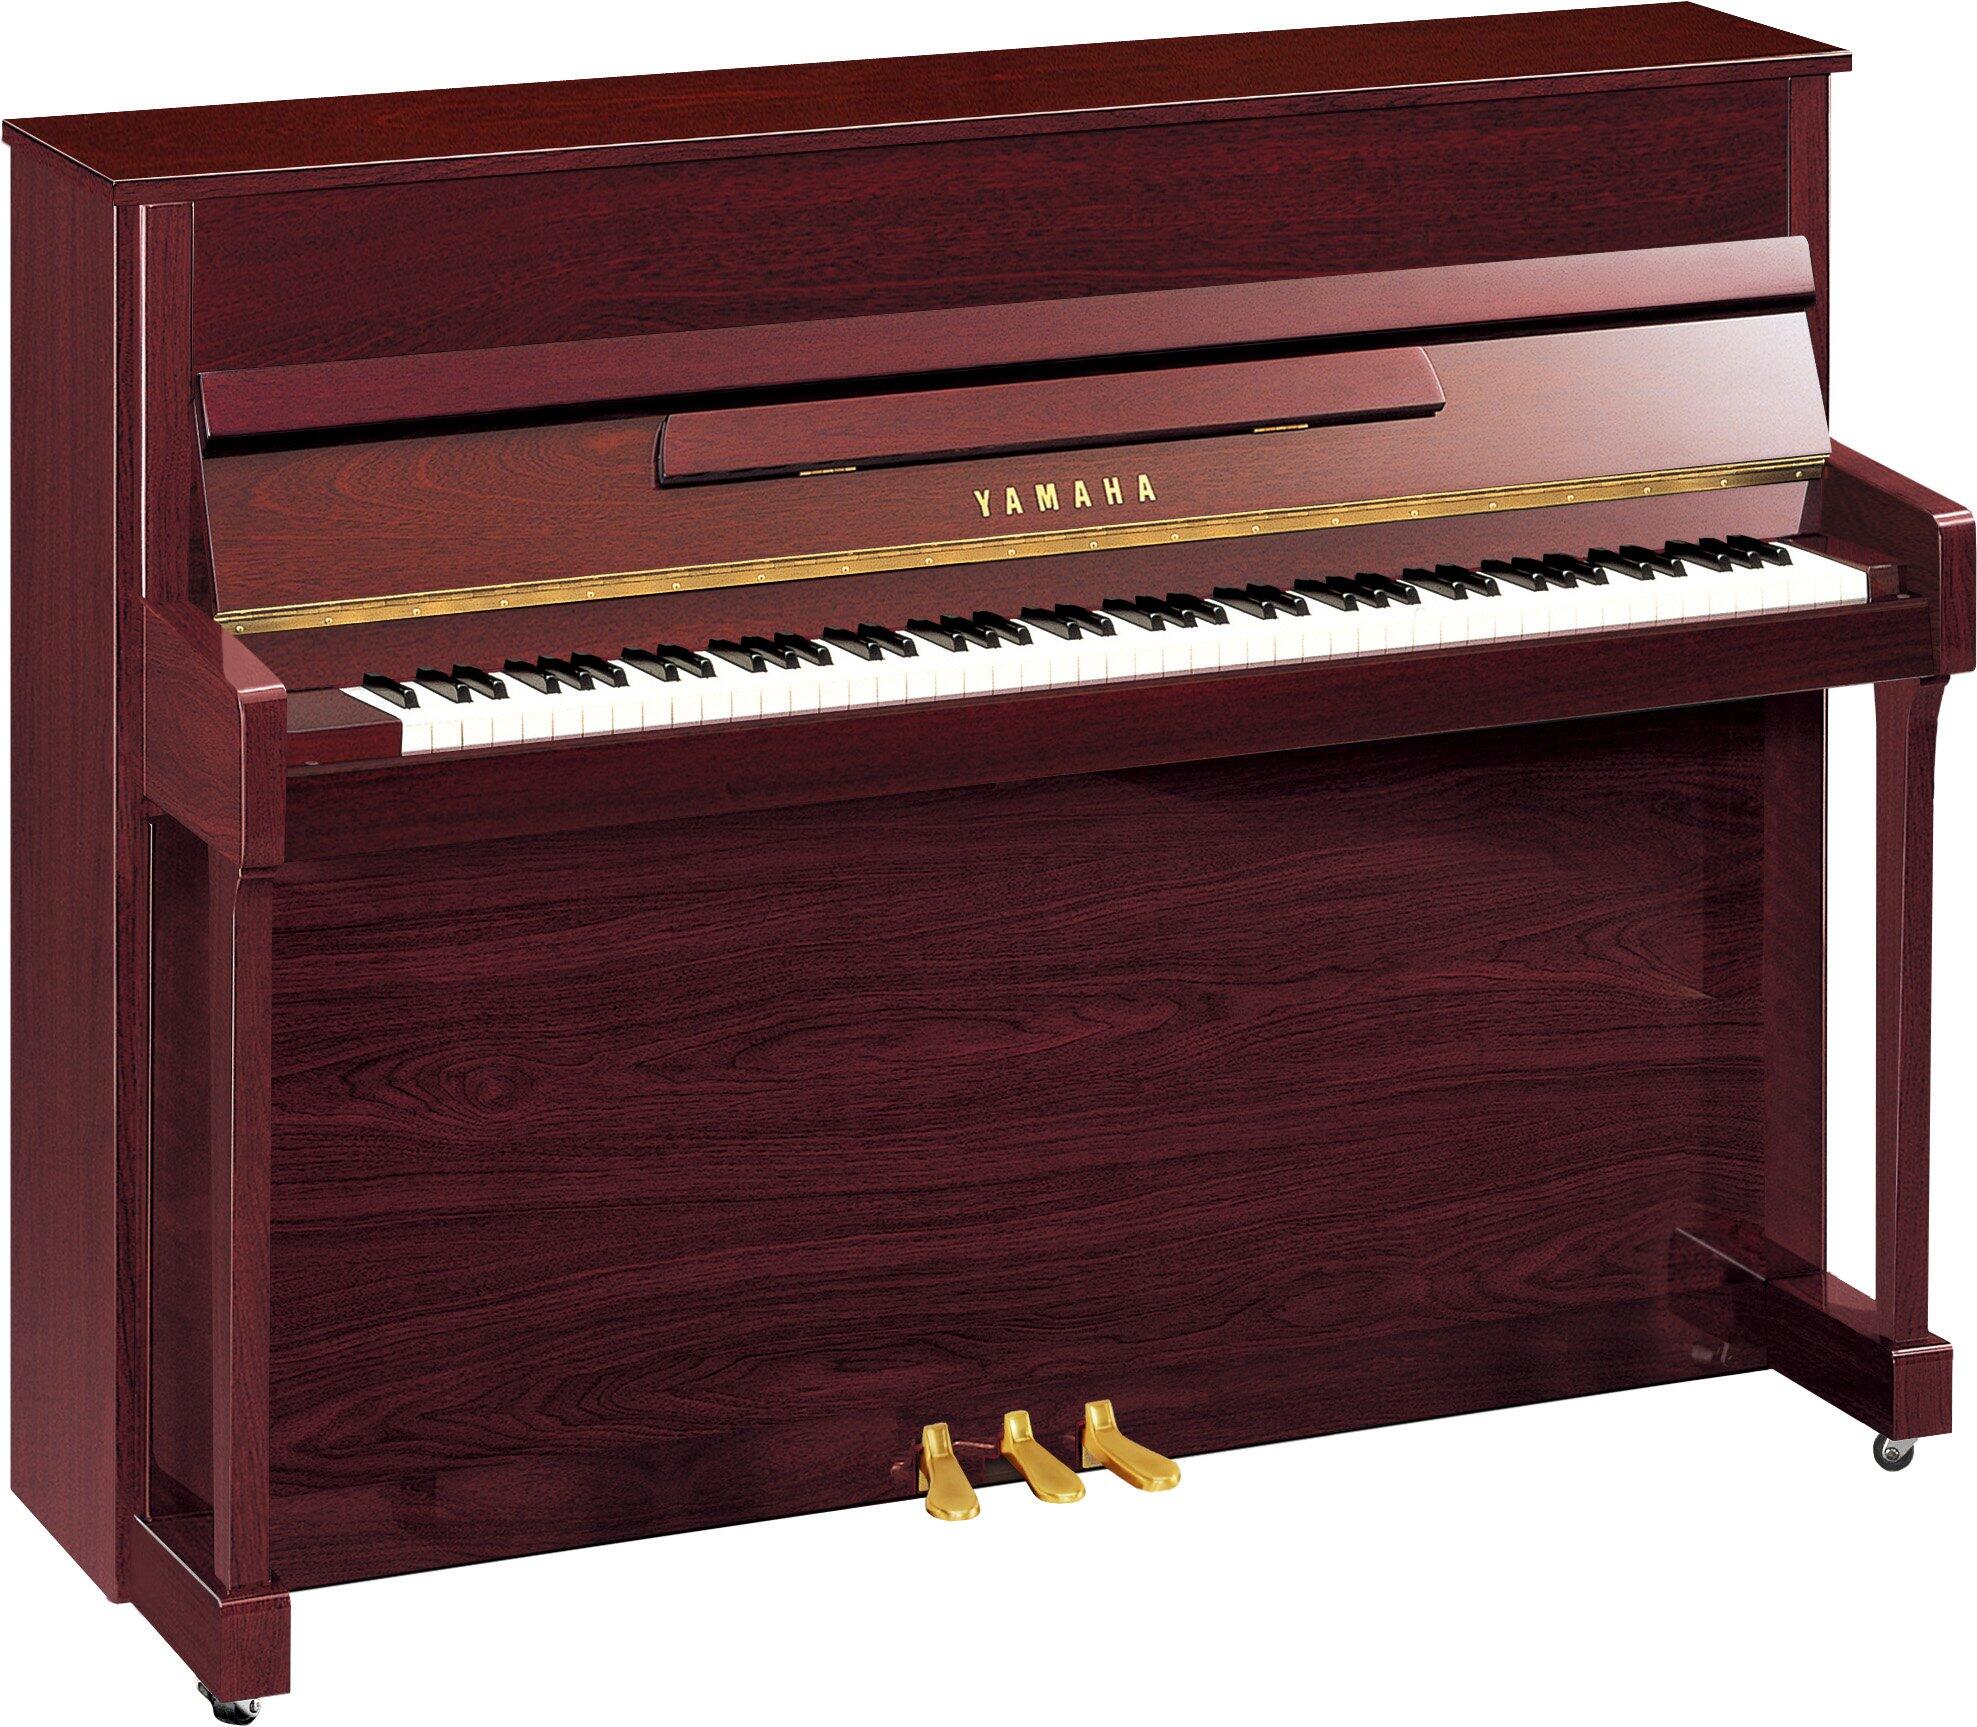 Yamaha Pianos Silent B2 SC3 PM Silent Gloss Polished Mahogany 113 cm : photo 1